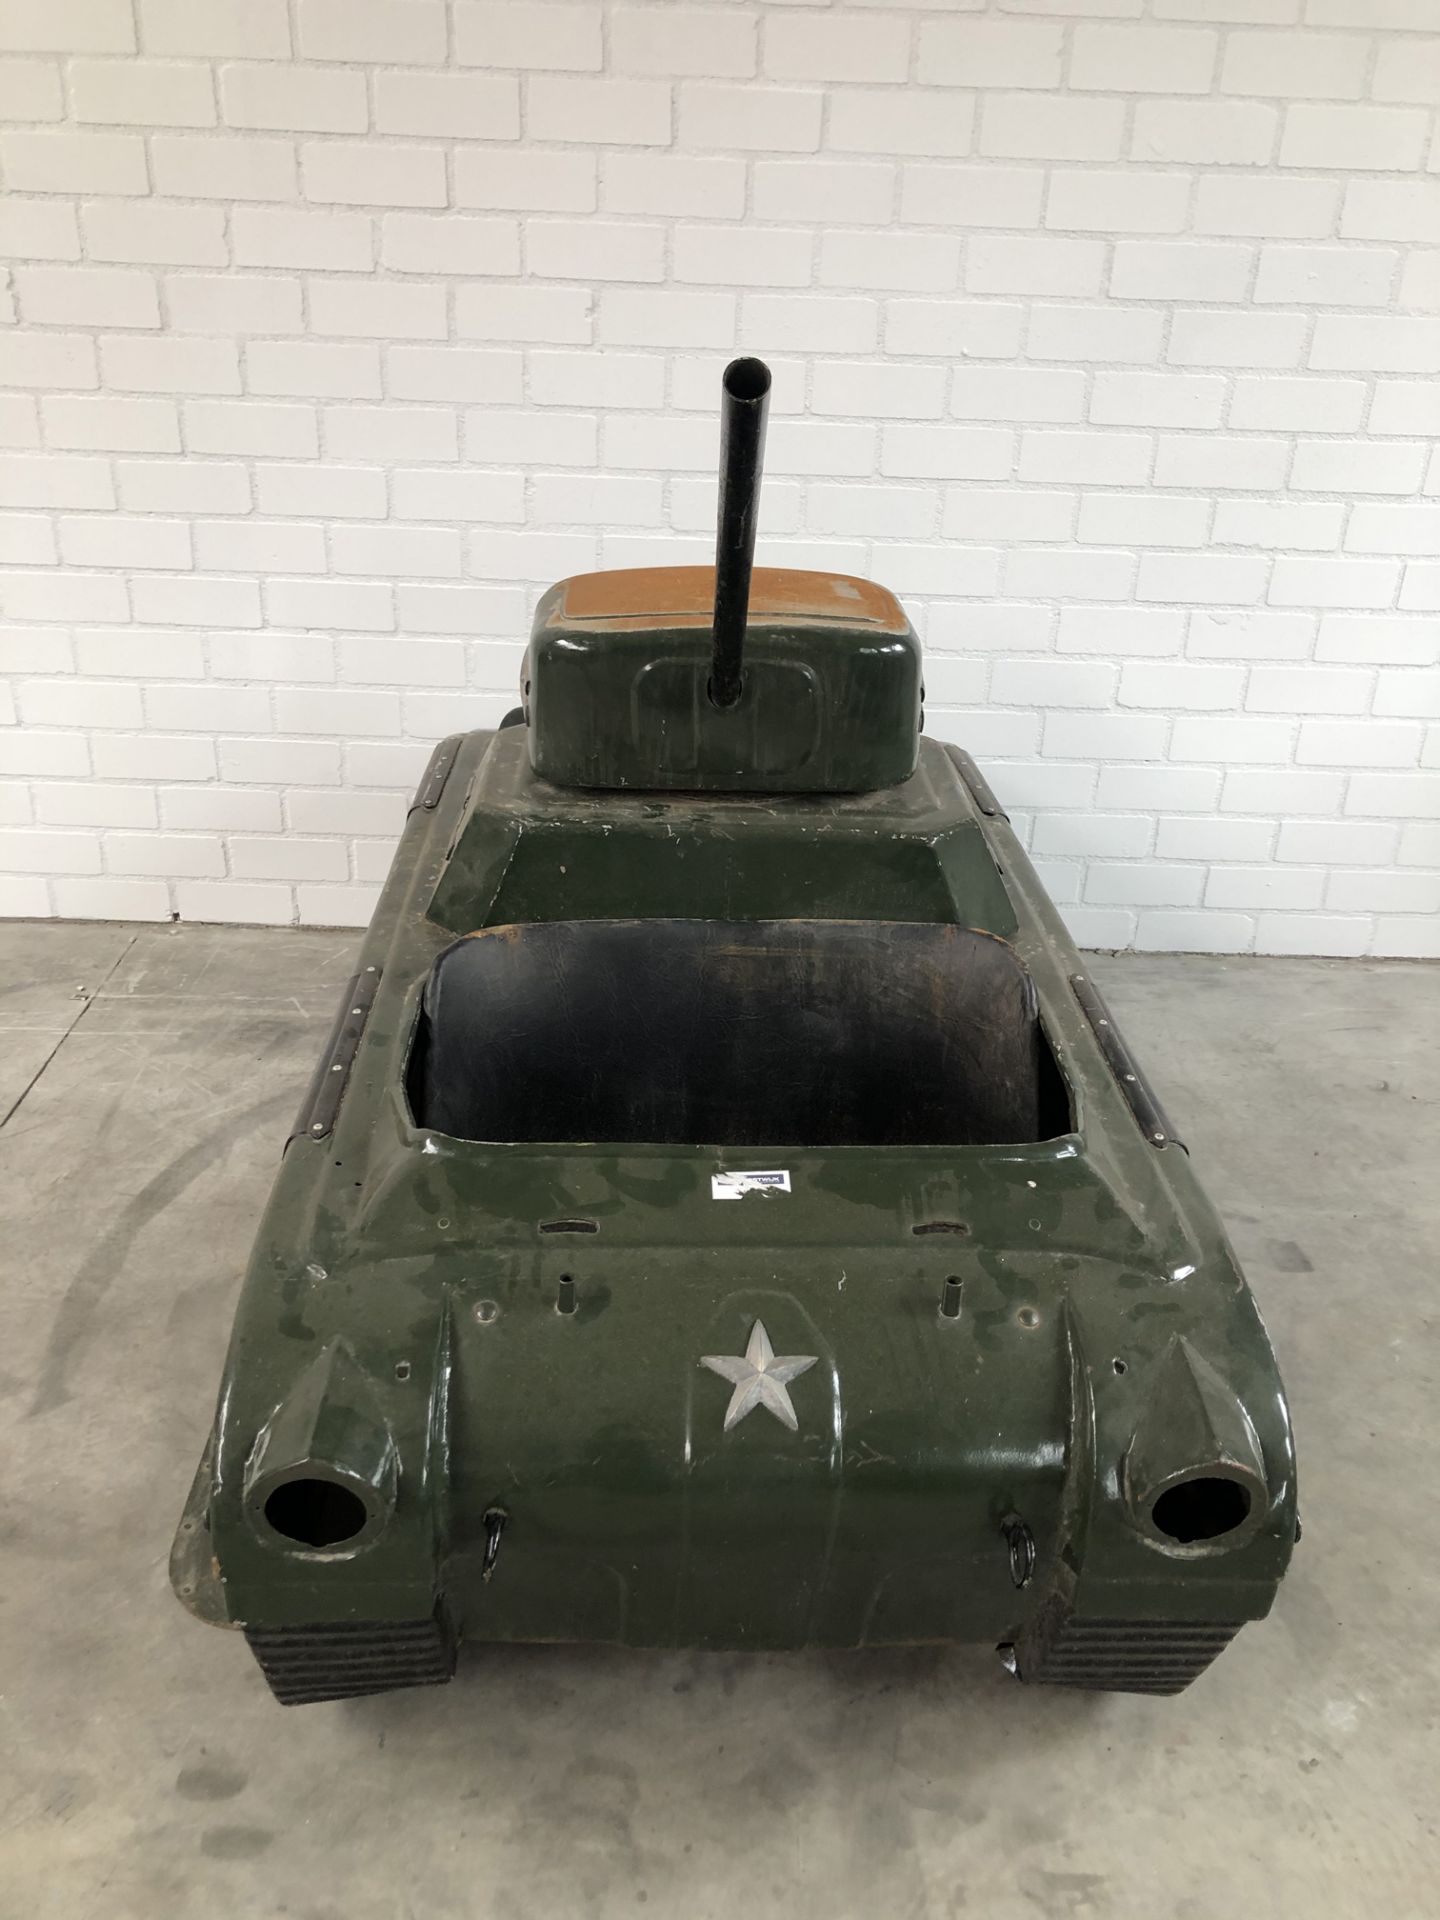 Unrestored L'Autopede Carousel Tank - Image 3 of 16